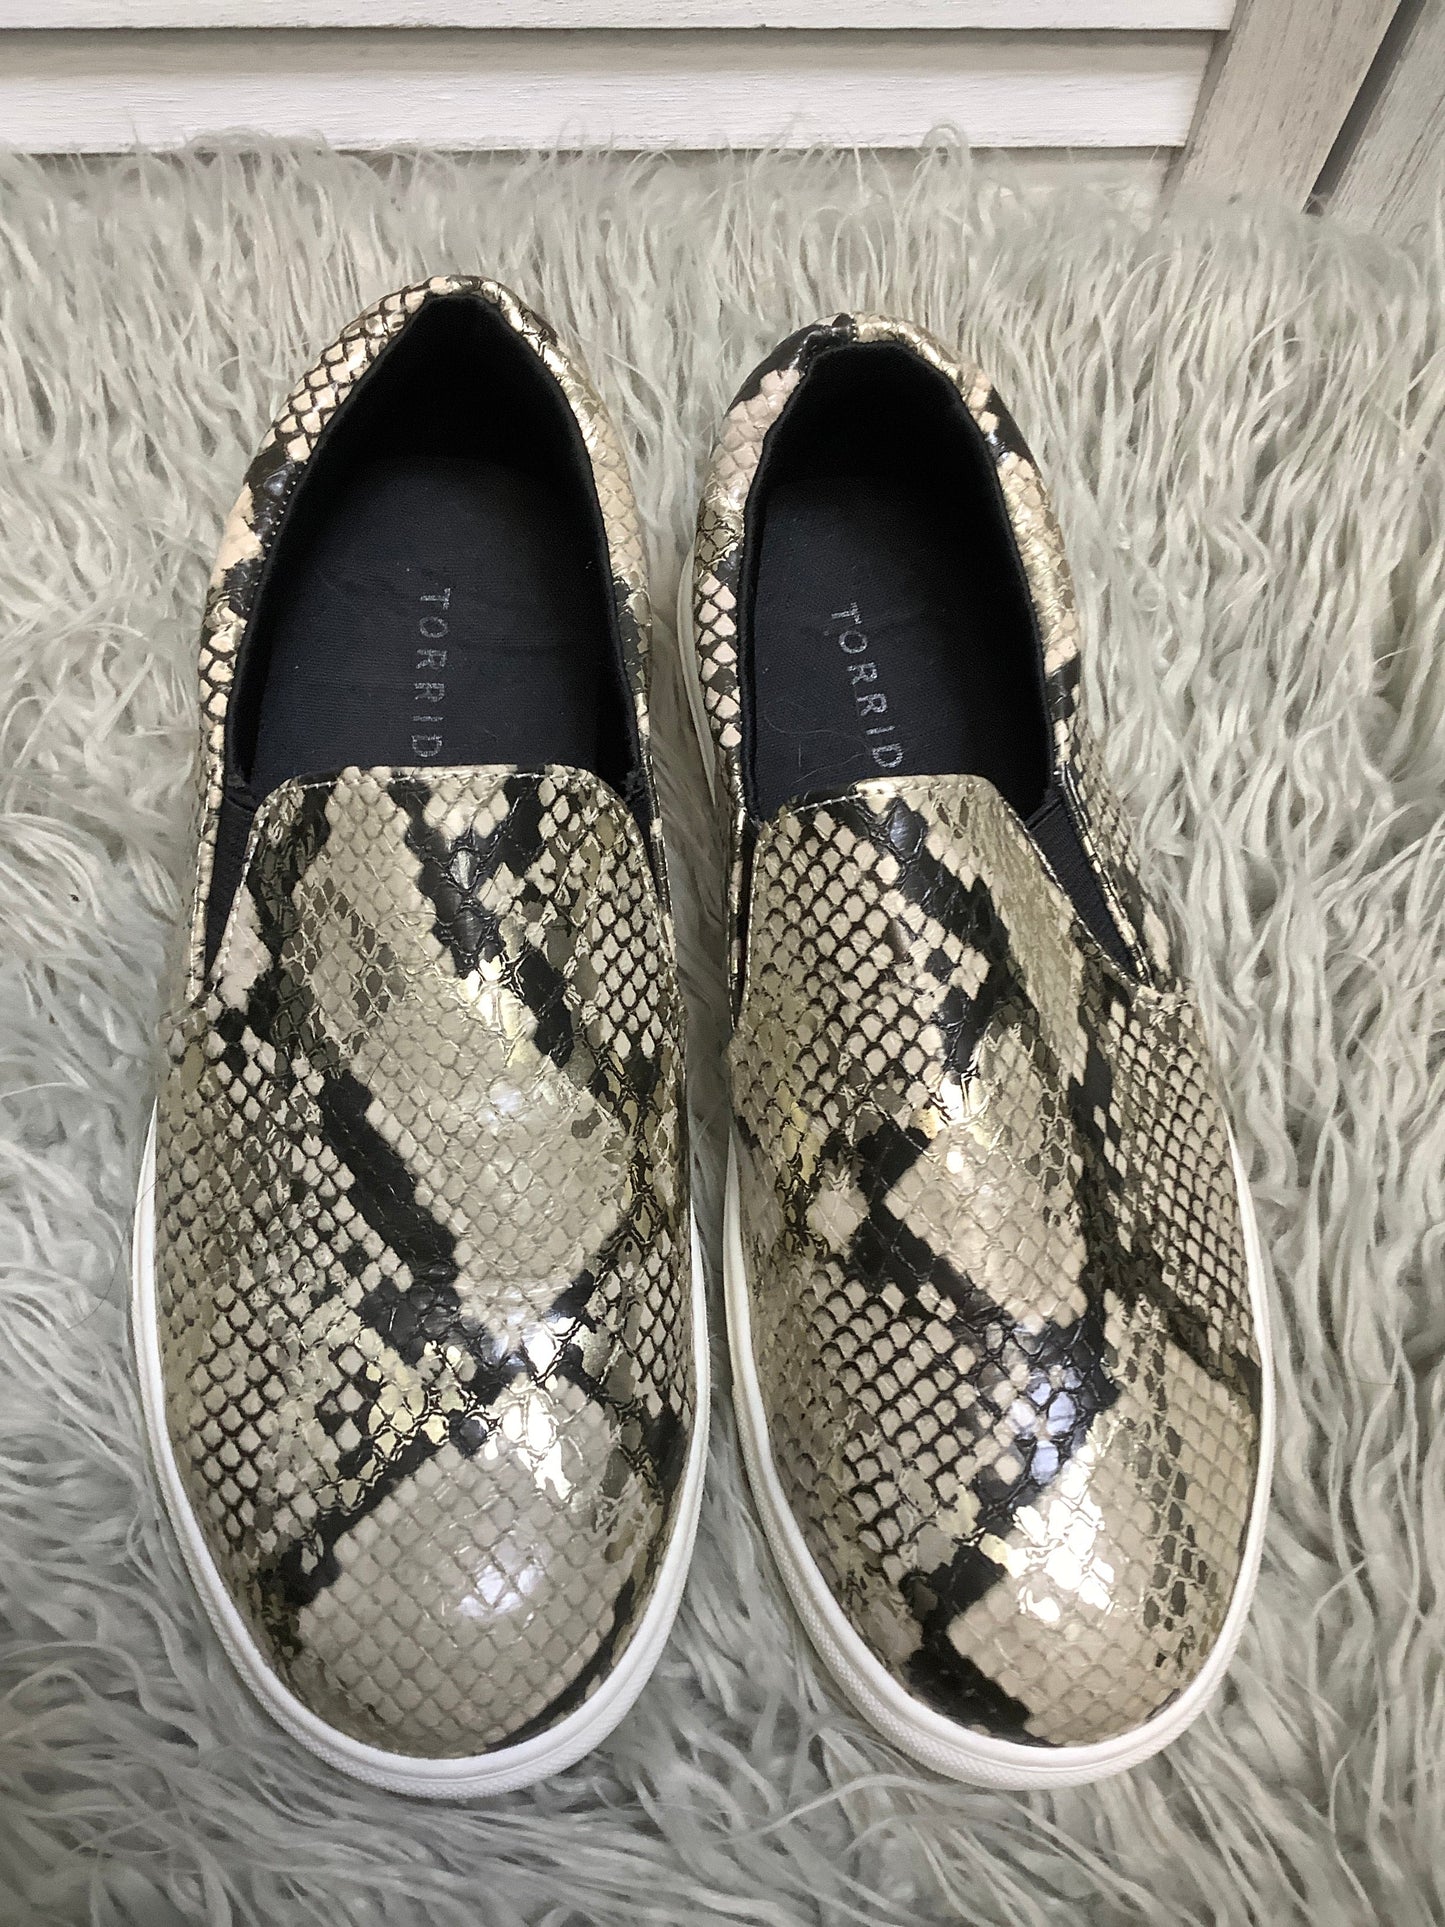 Snakeskin Print Shoes Flats Torrid, Size 7.5